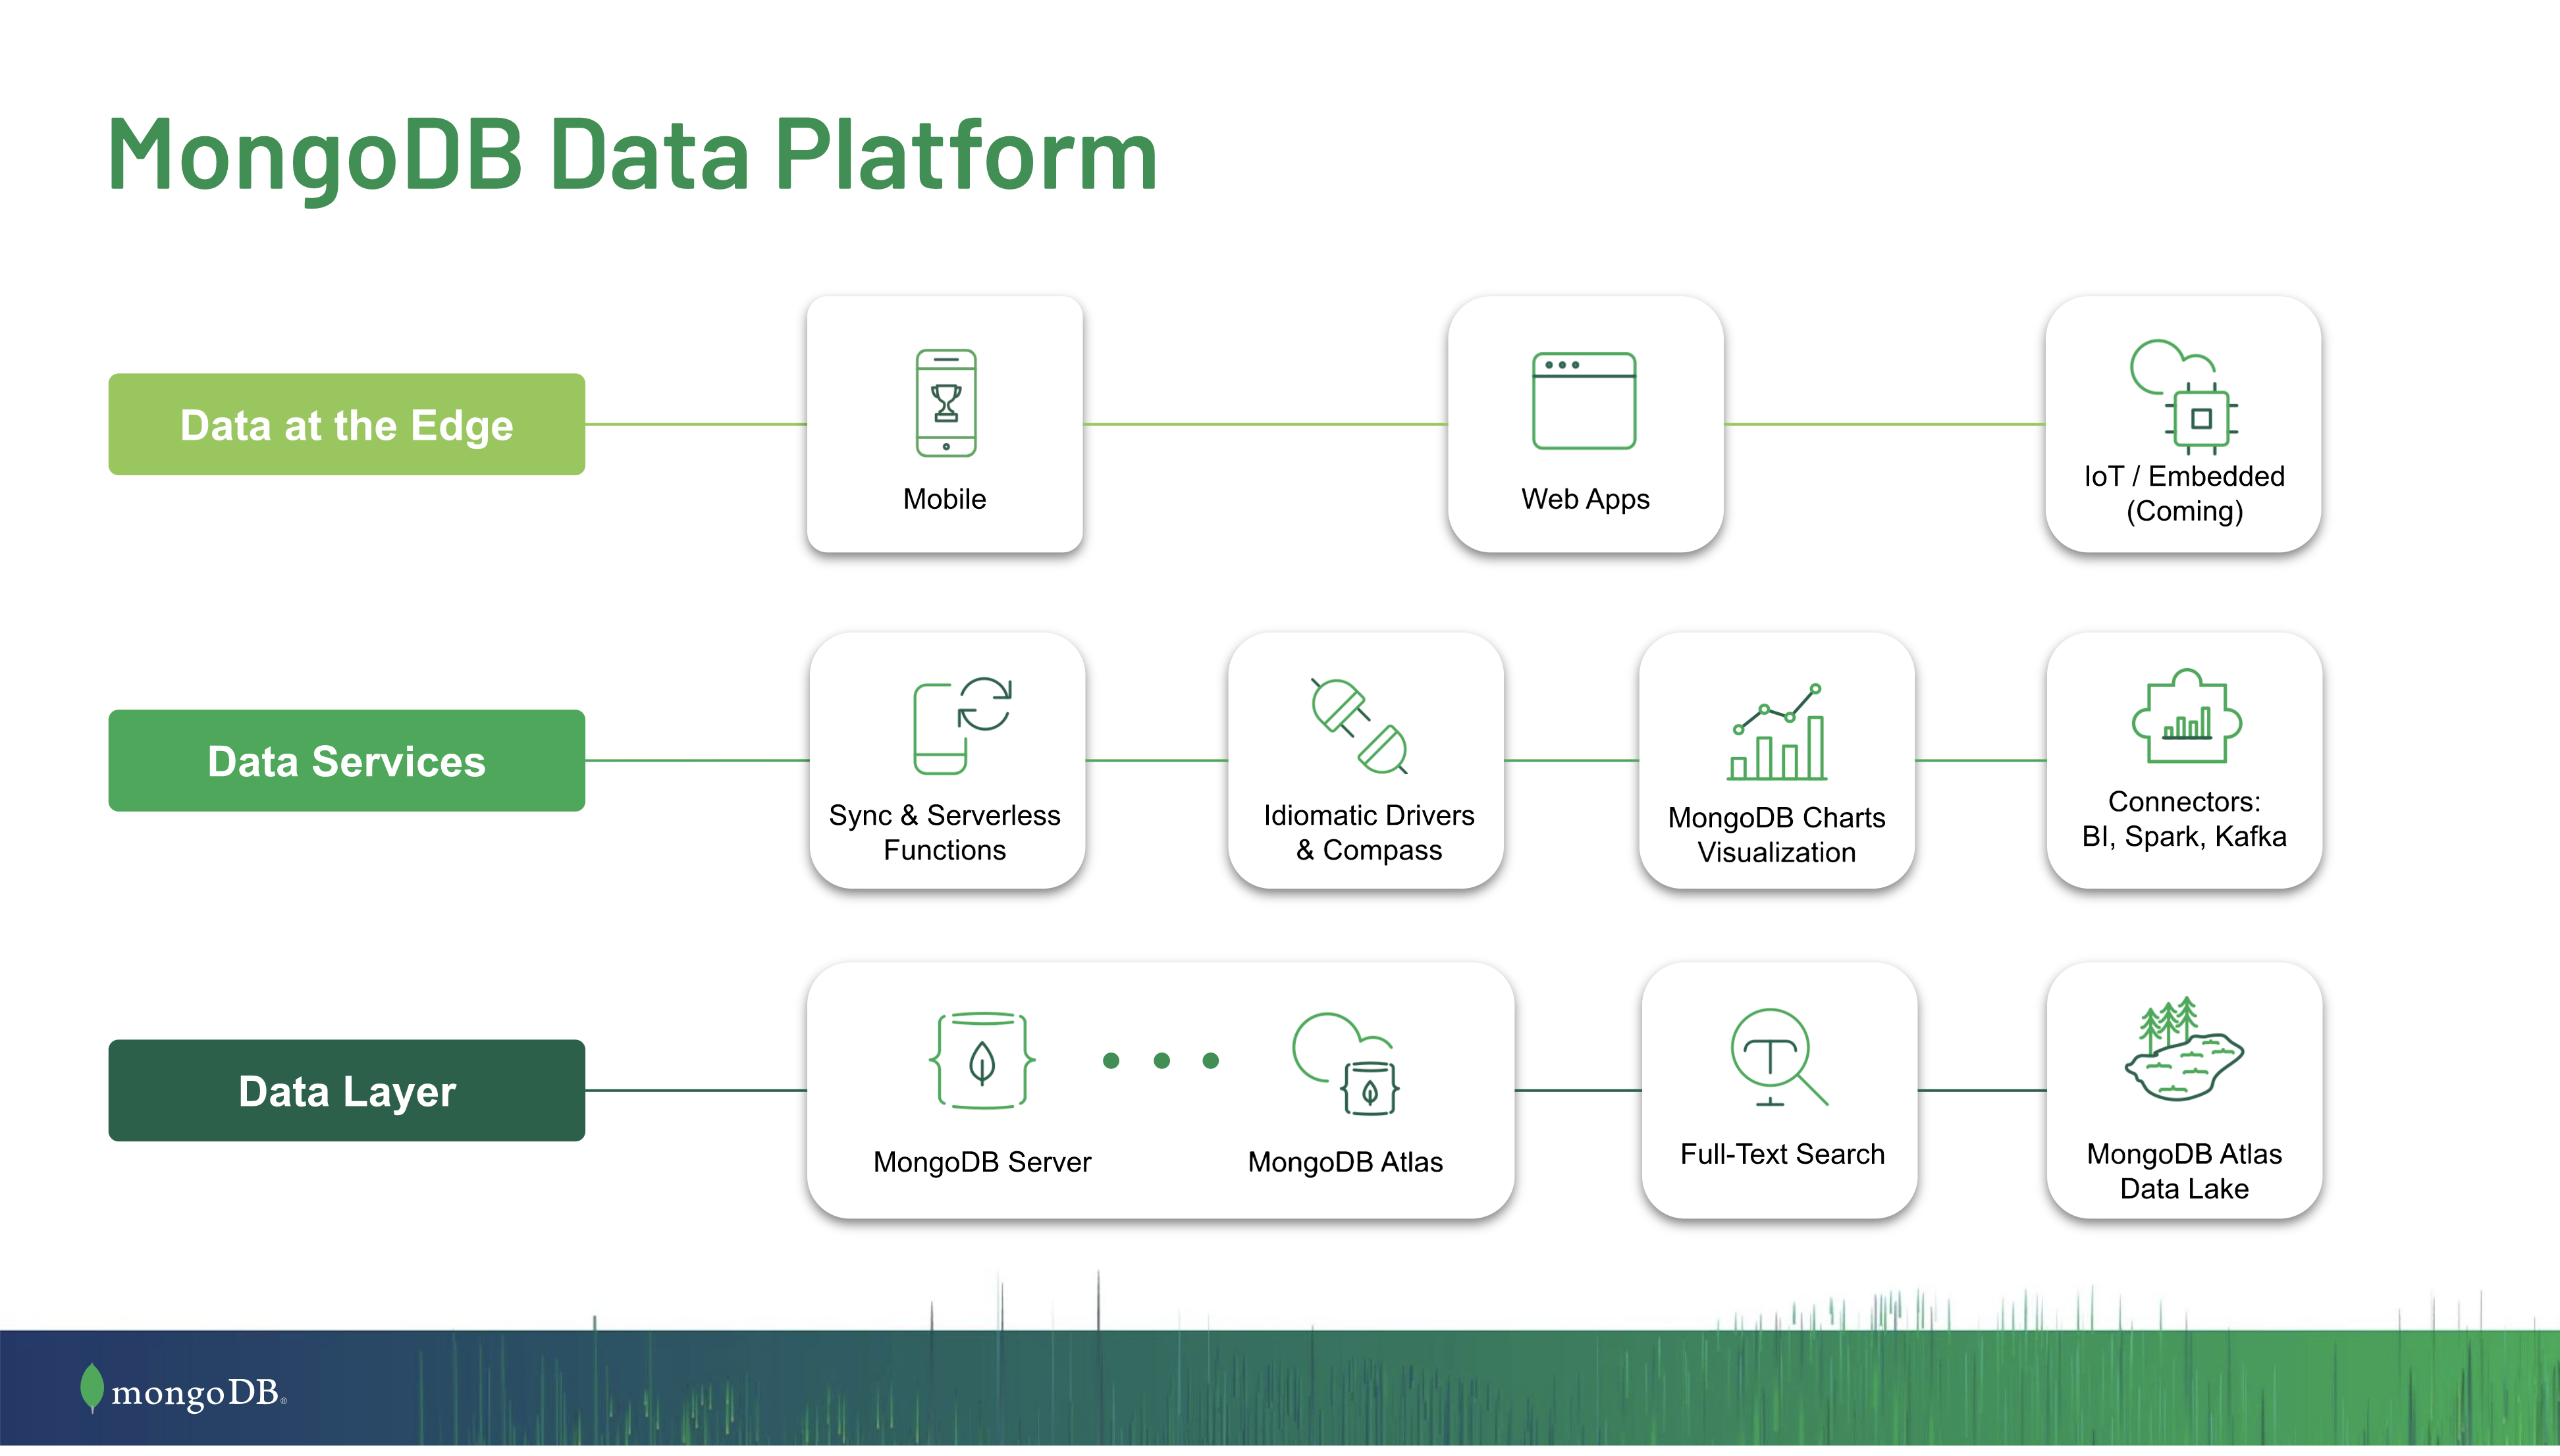 The MongoDB Data Platform